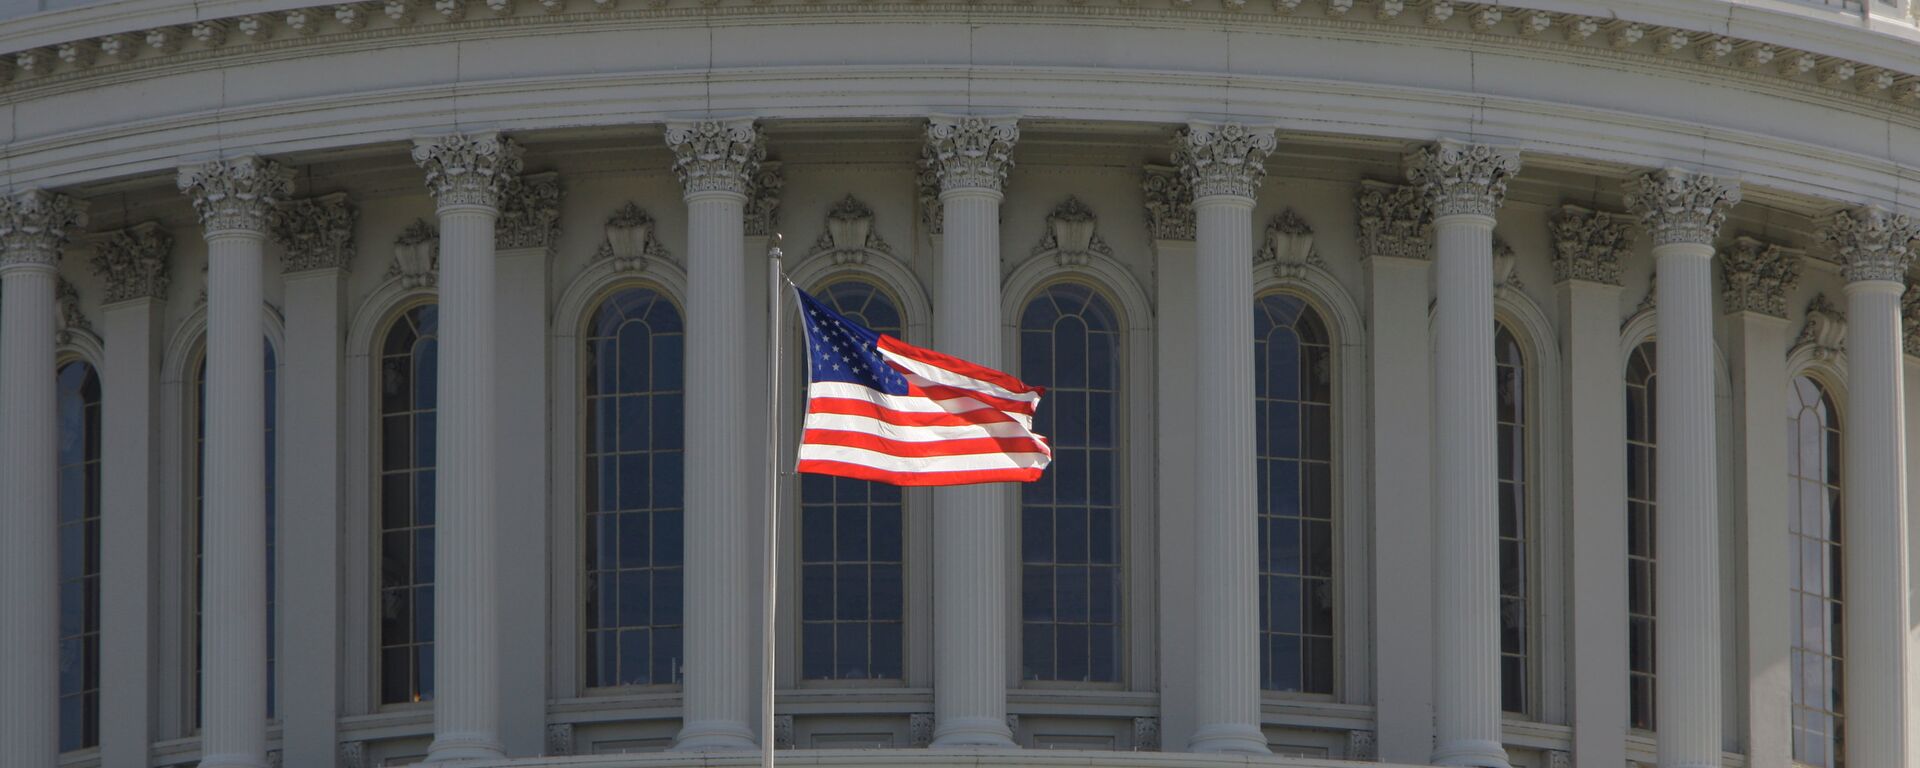 Bandera estadounidense frente al Capitolio de EEUU en Washington - Sputnik Mundo, 1920, 10.02.2021